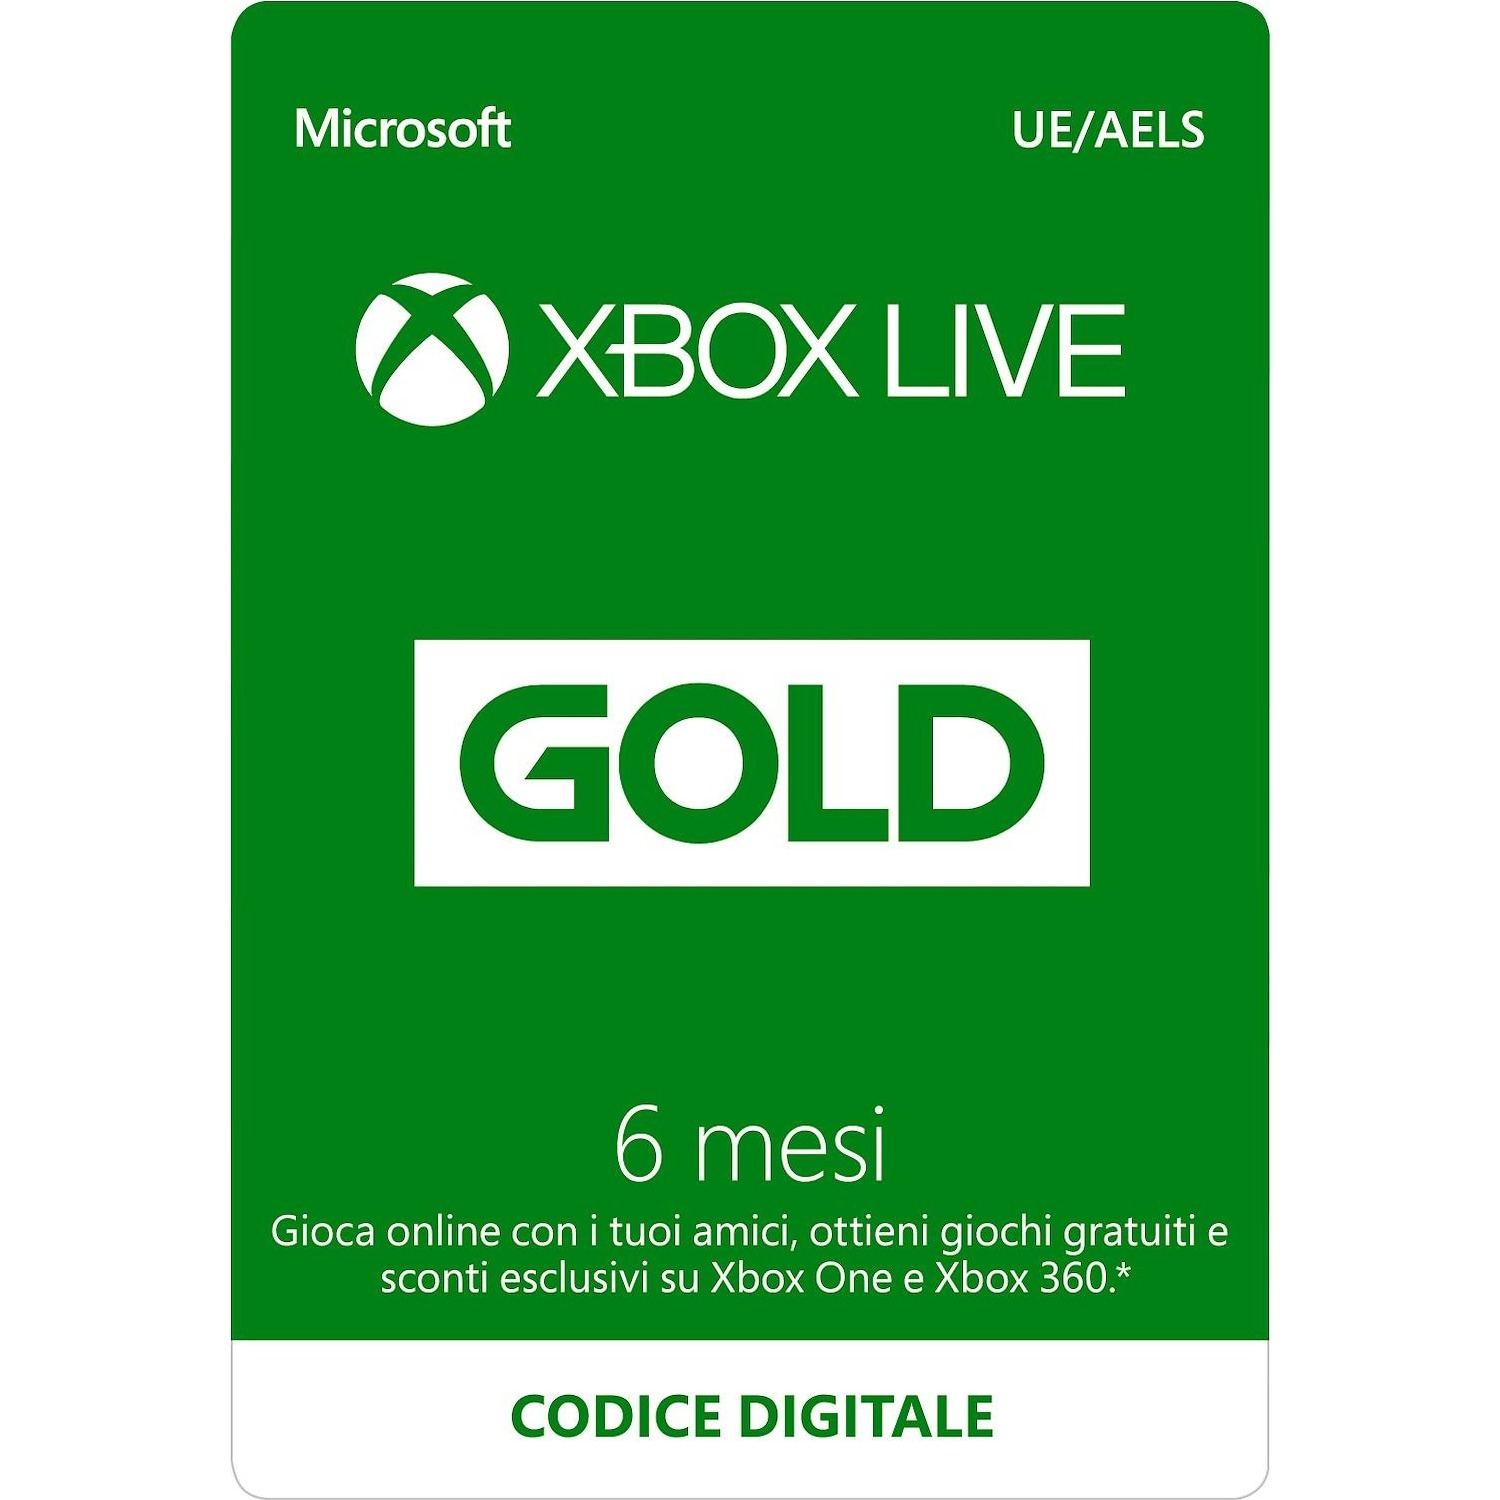 Immagine per Microsoft Xbox Live Gold 6 mesi CARD da DIMOStore